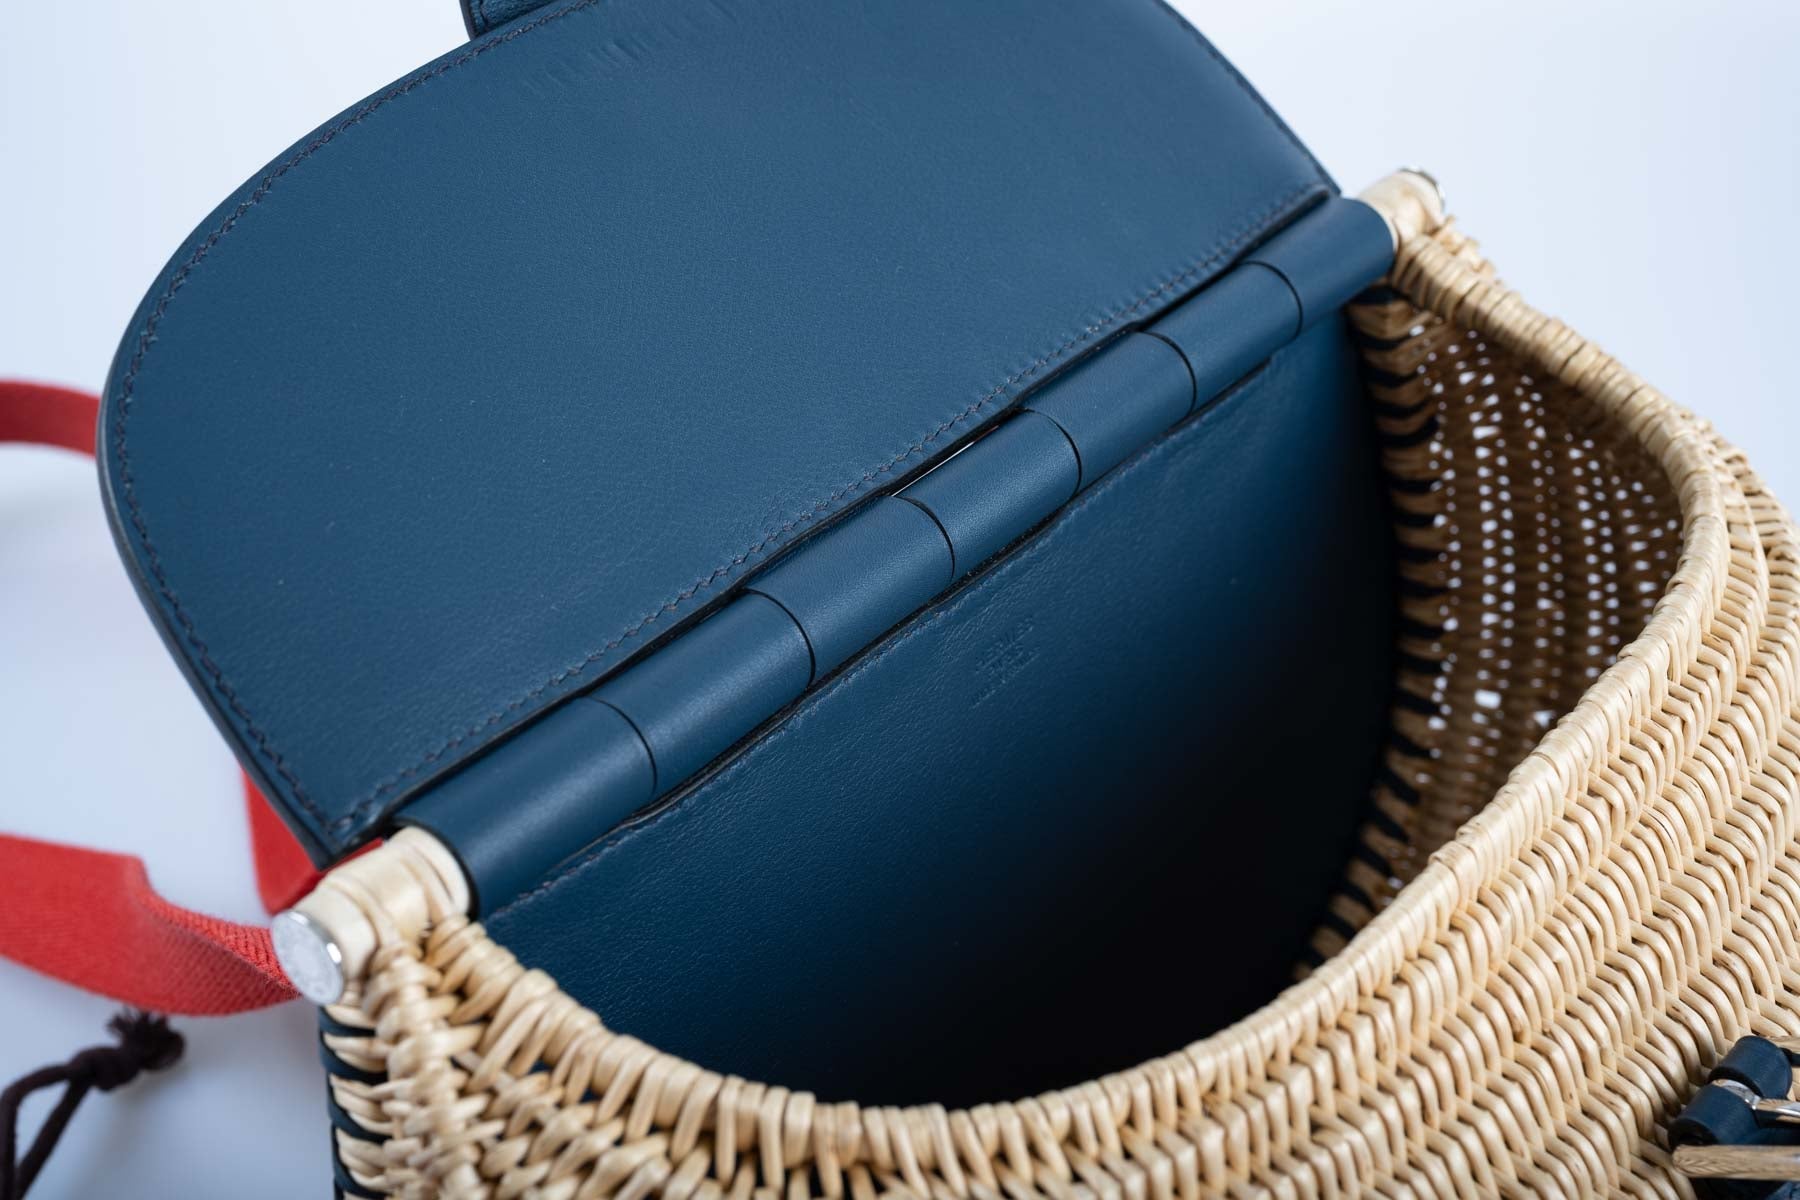 Hermès Picnic Fishing Bag Osier Wicker and Blue Swift, Red Strap Palladium Hardware